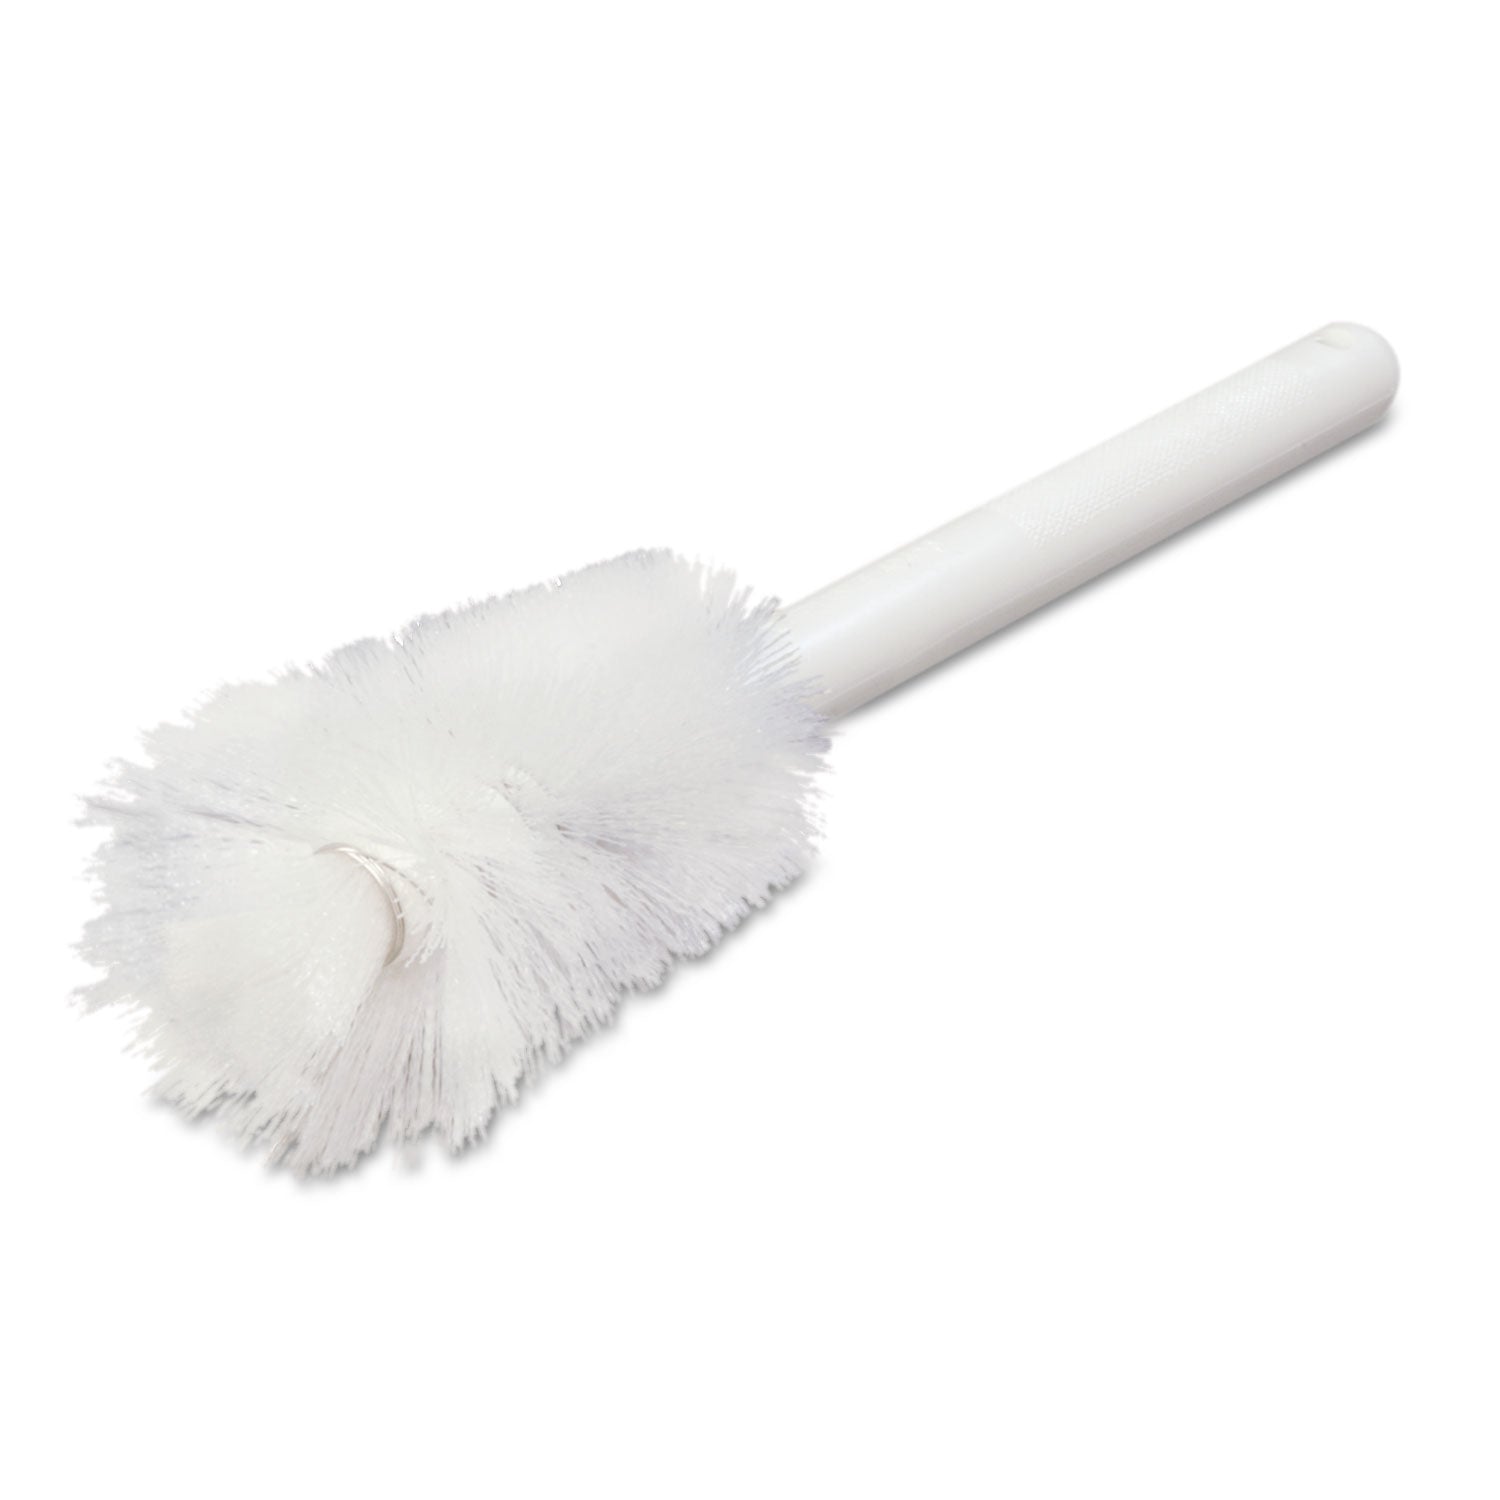 Sparta Handle Bottle Brush, Pint, White Polyester Bristles, 4.5" Brush, 7.5" White Plastic Handle - 